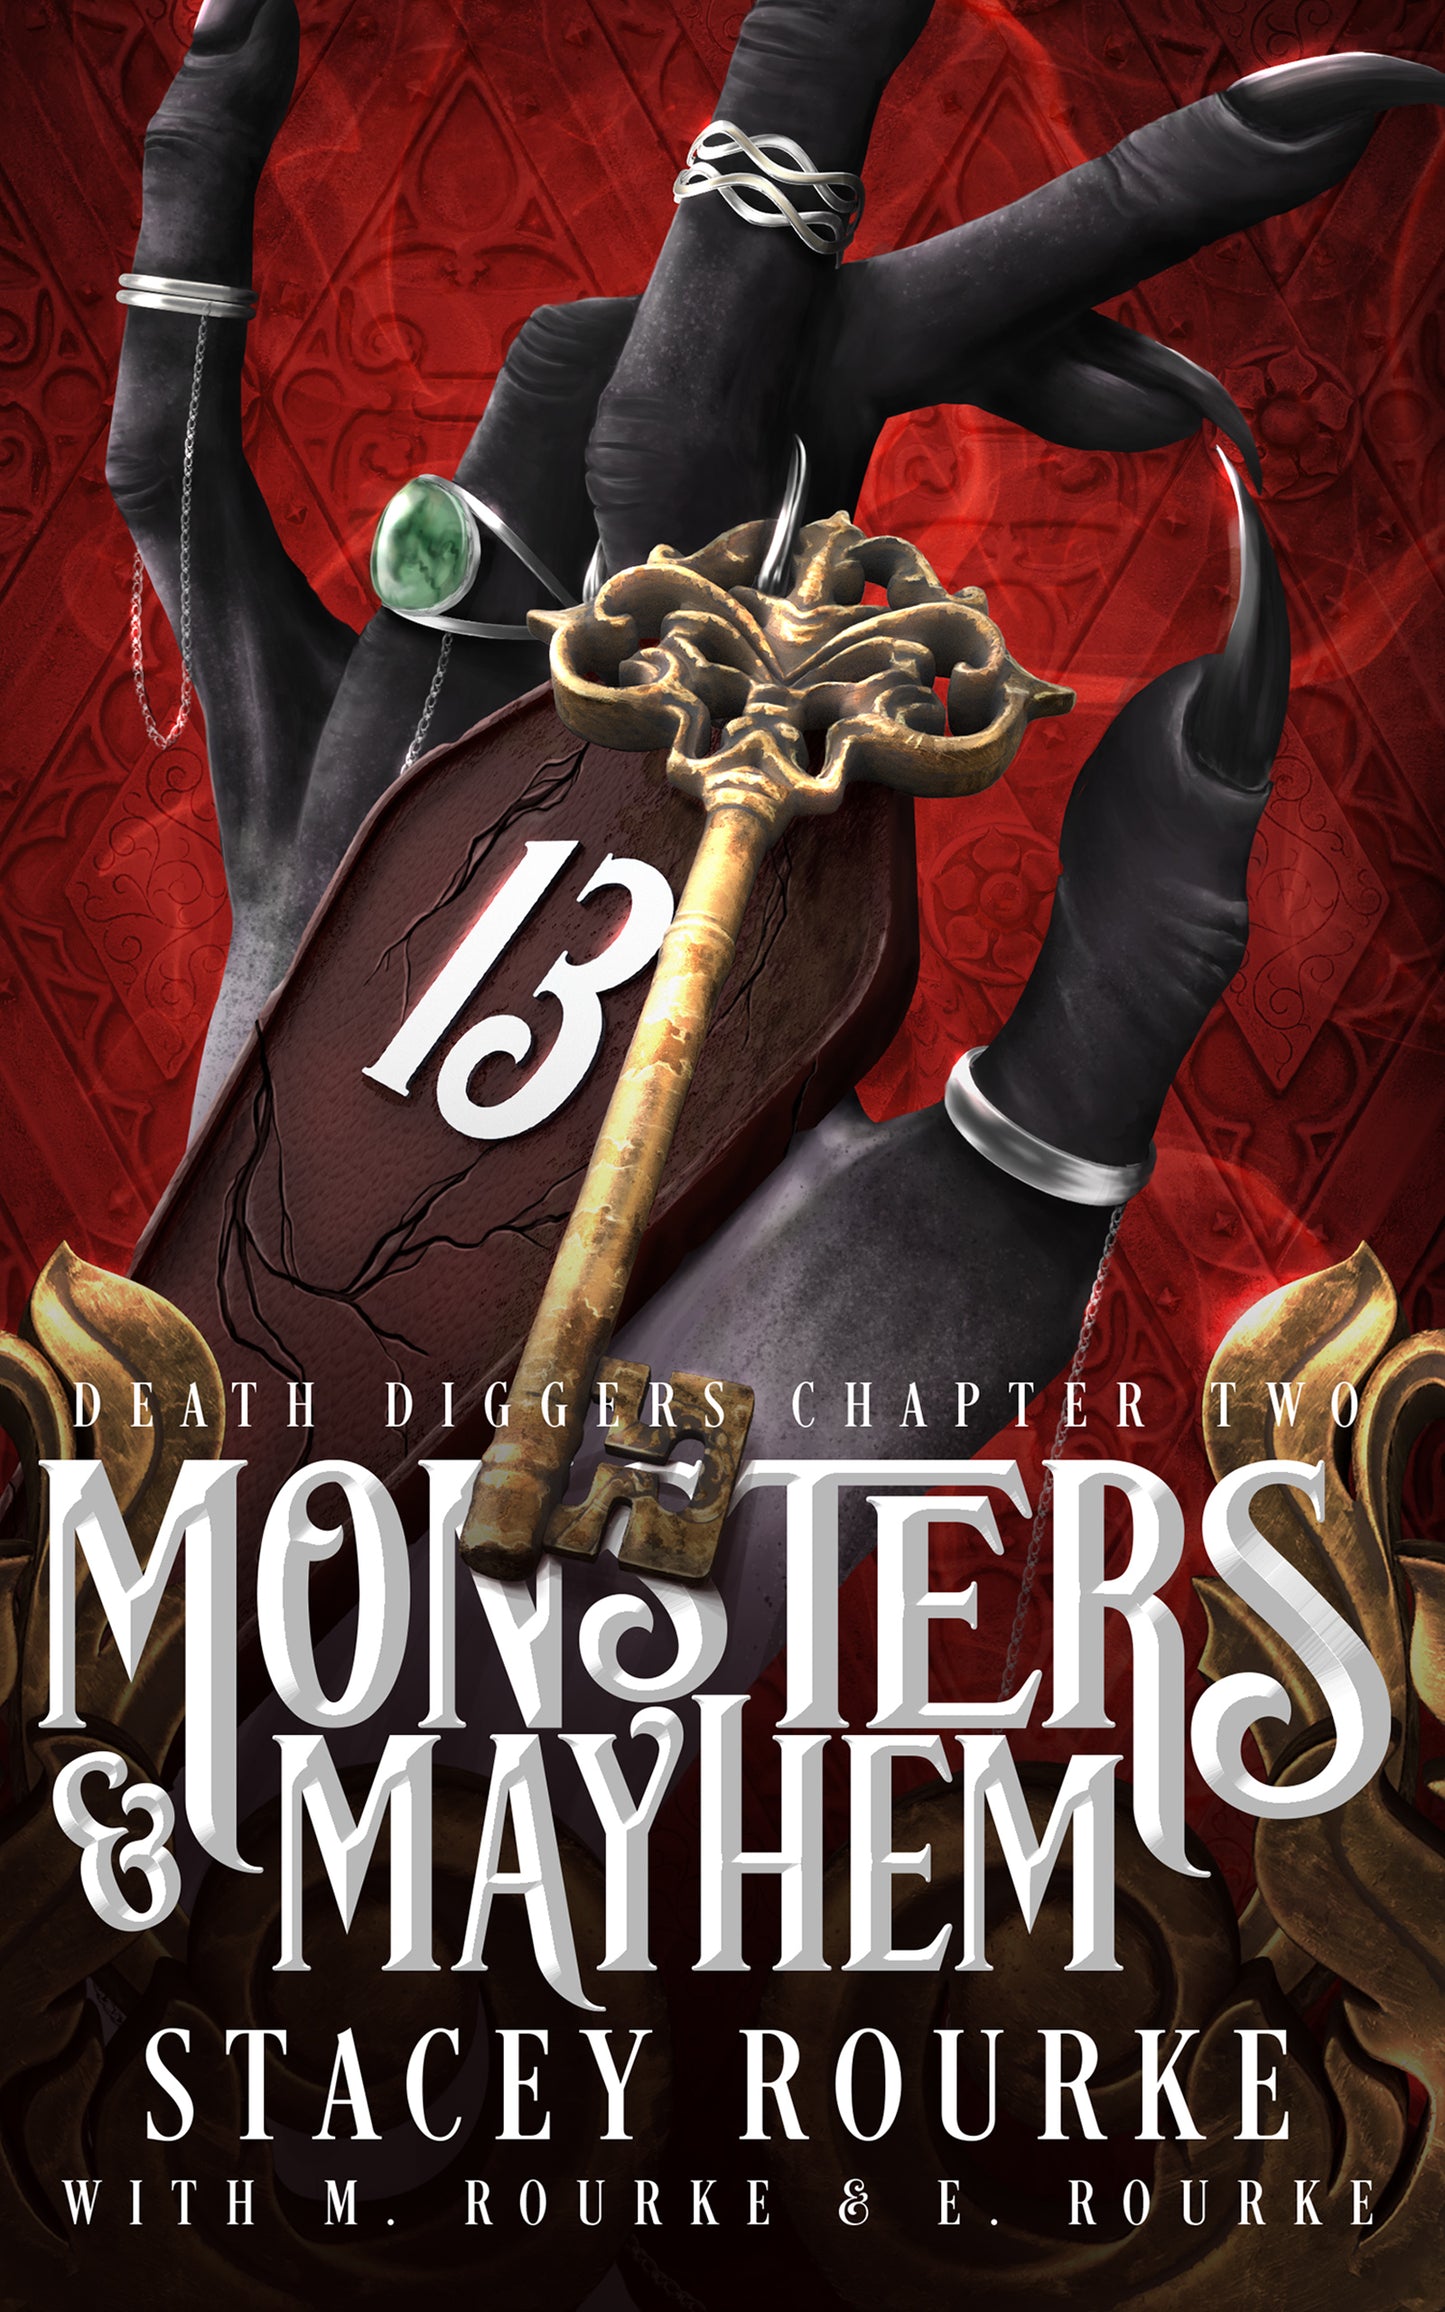 Death Diggers 4 - Signed Paperback of Monsters & Mayhem